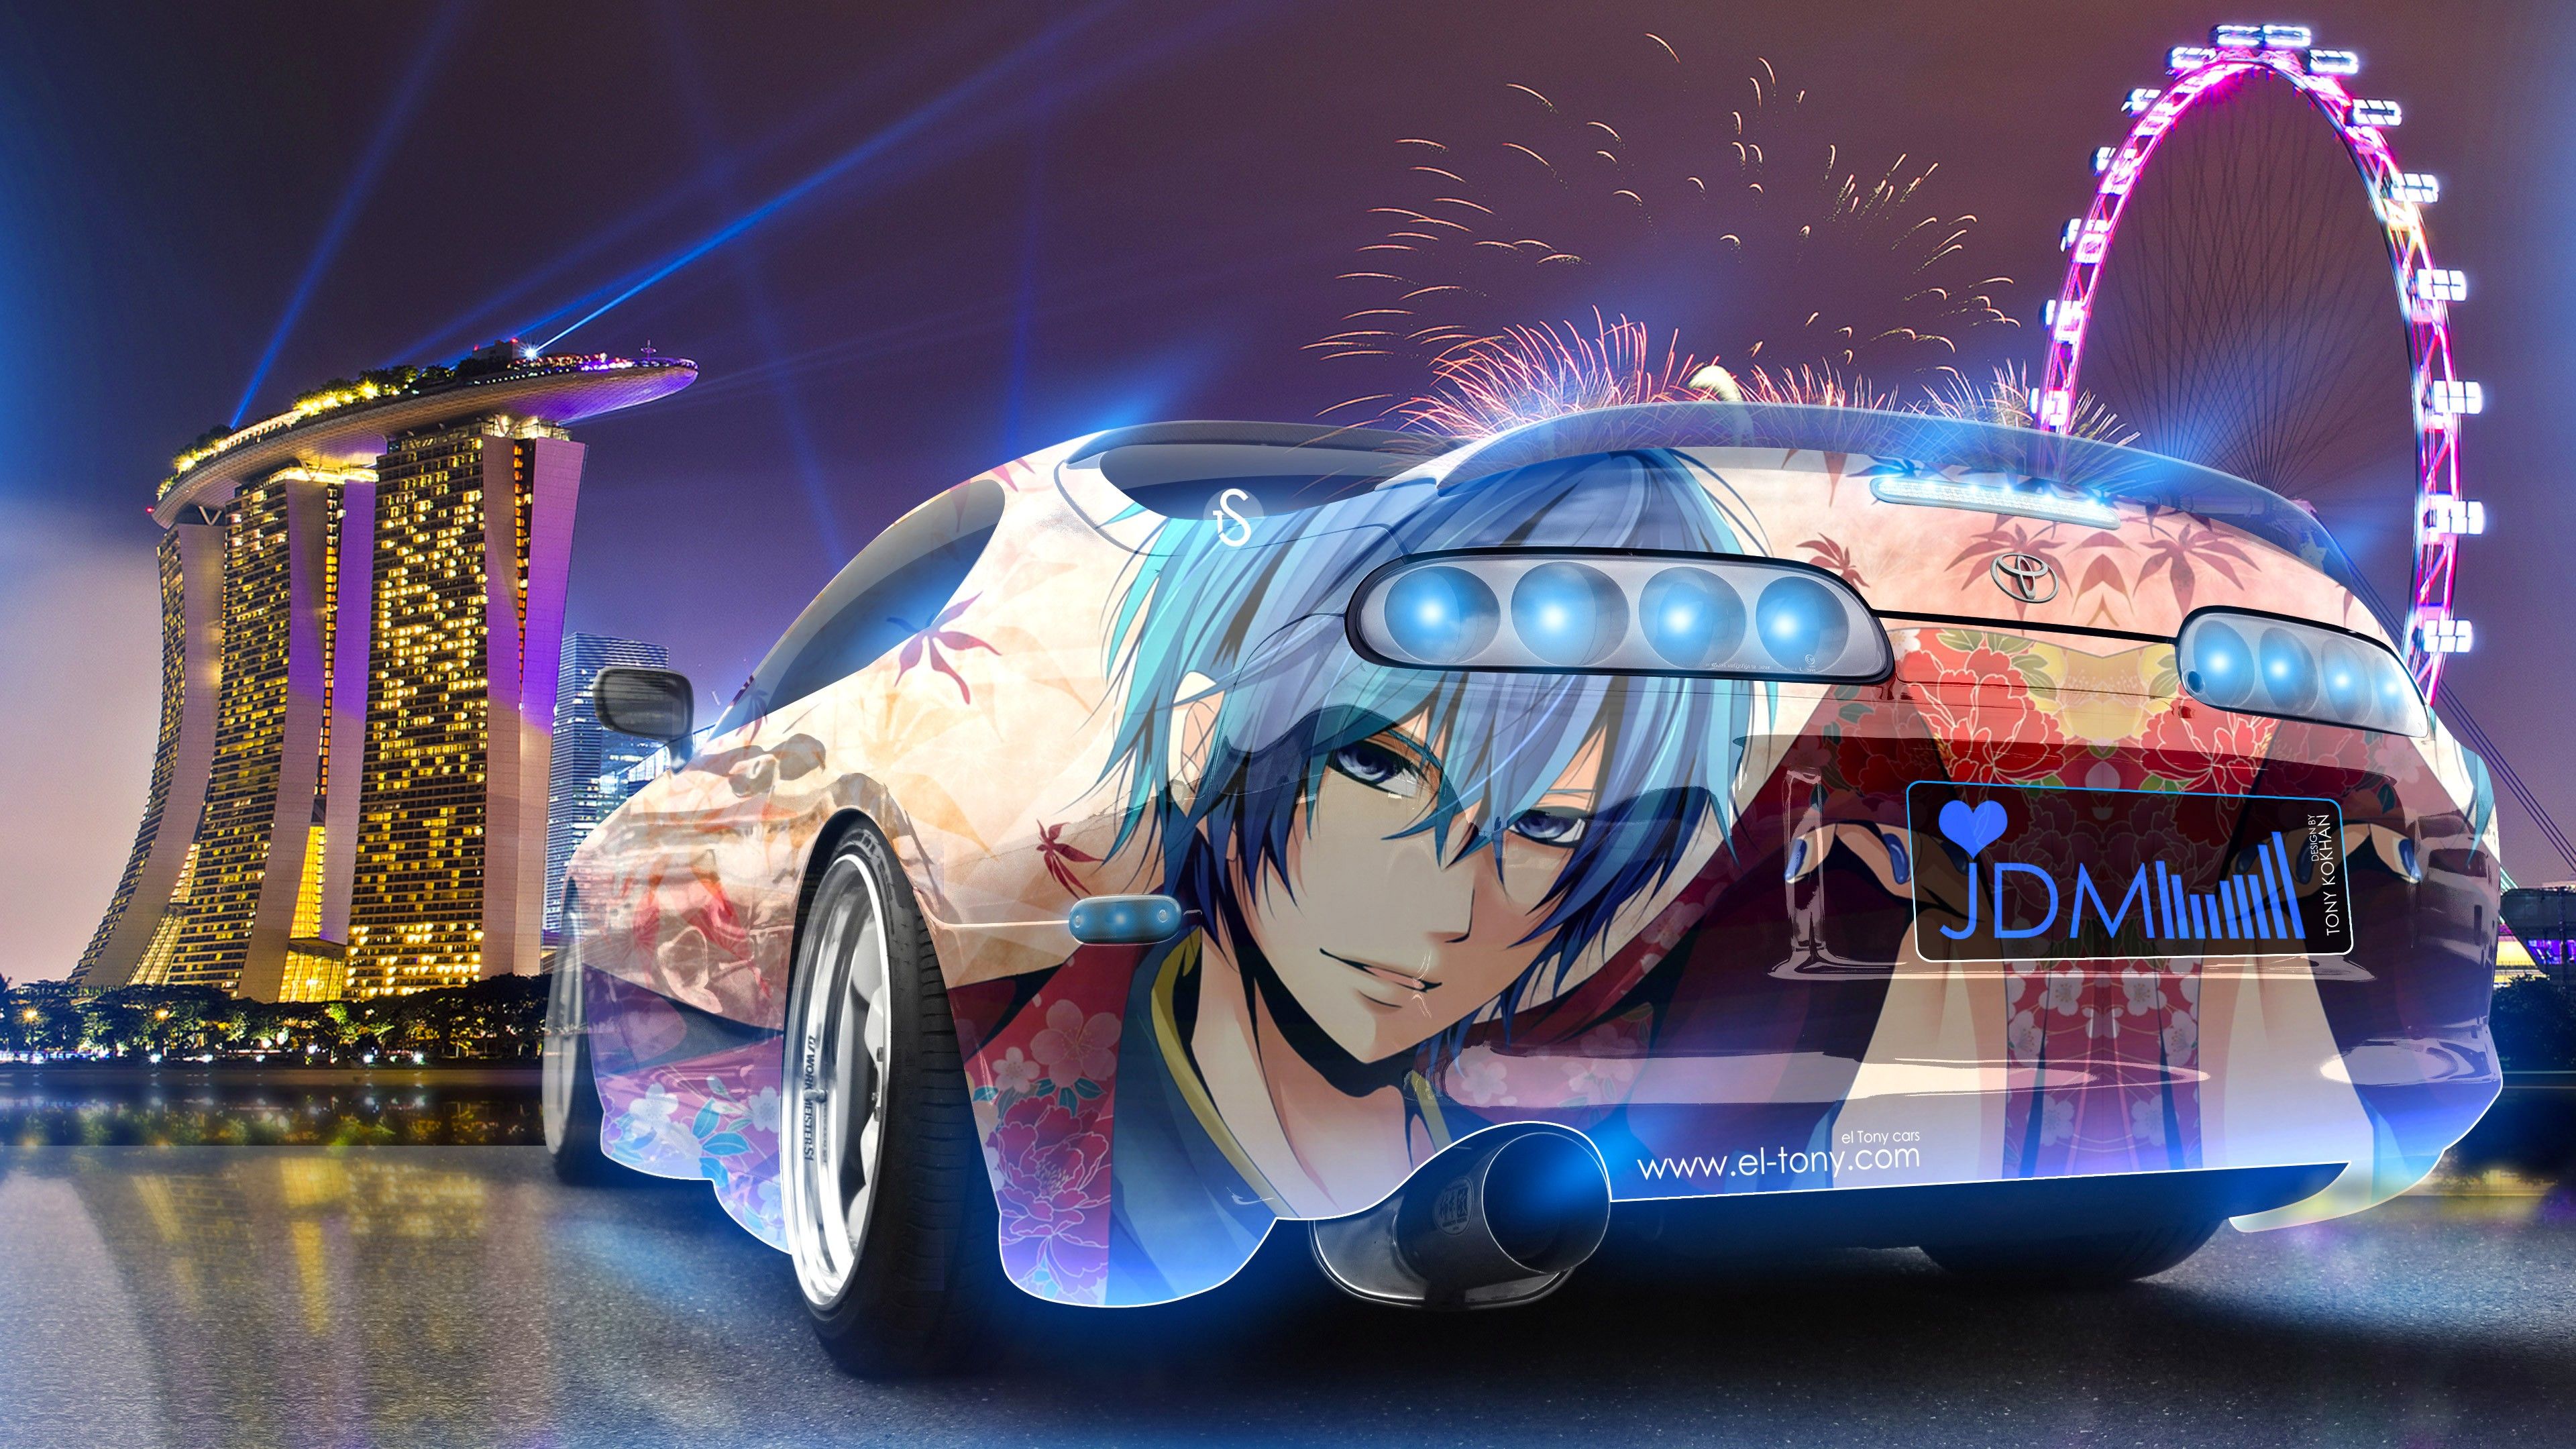 Super Car, Tony Kokhan, Colorful, Toyota Supra, JDM, Anime